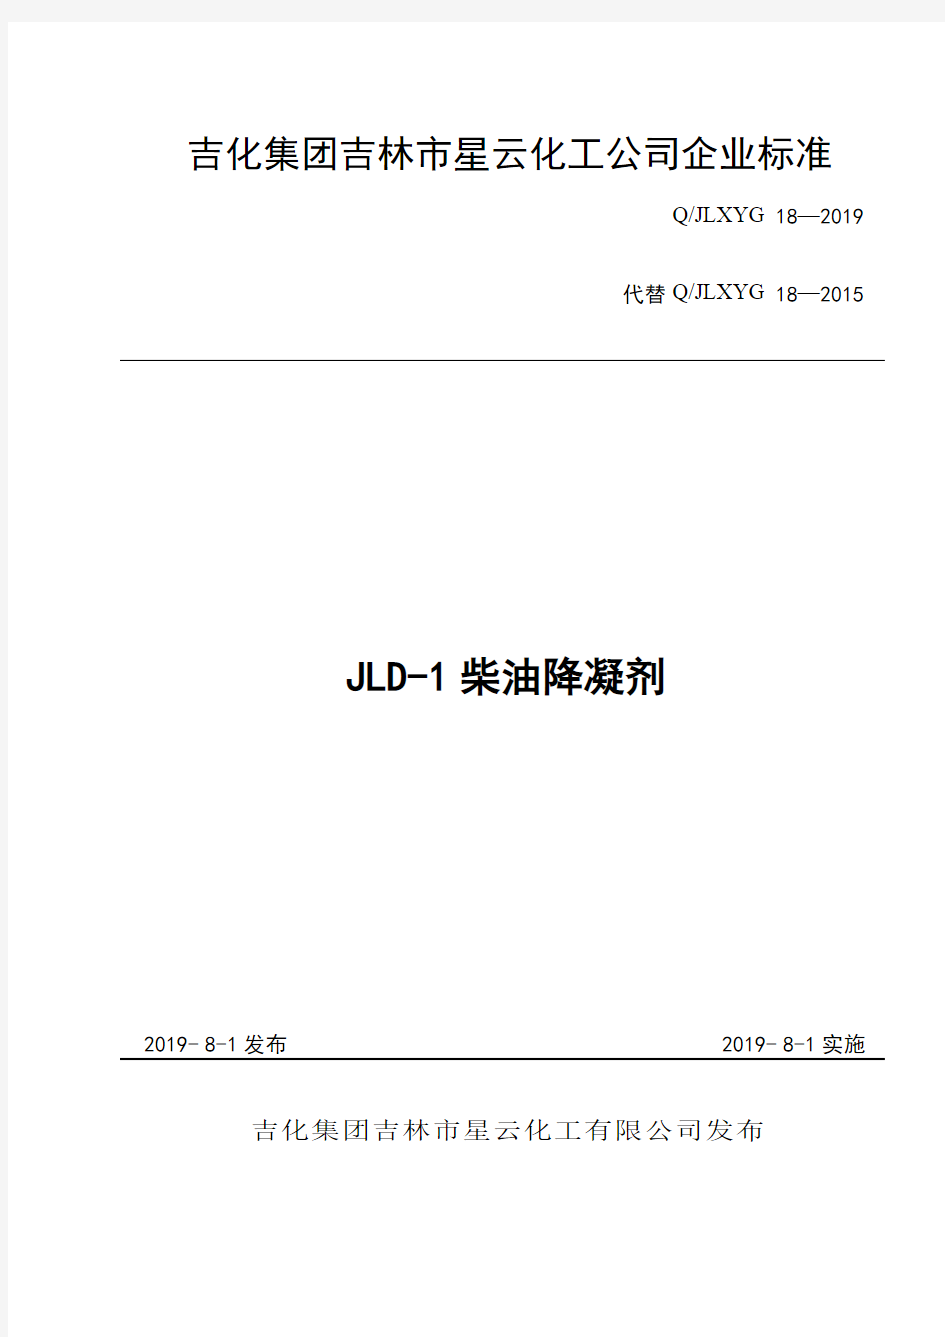 Q_JLXYG 18-2019柴油降凝剂企业标准